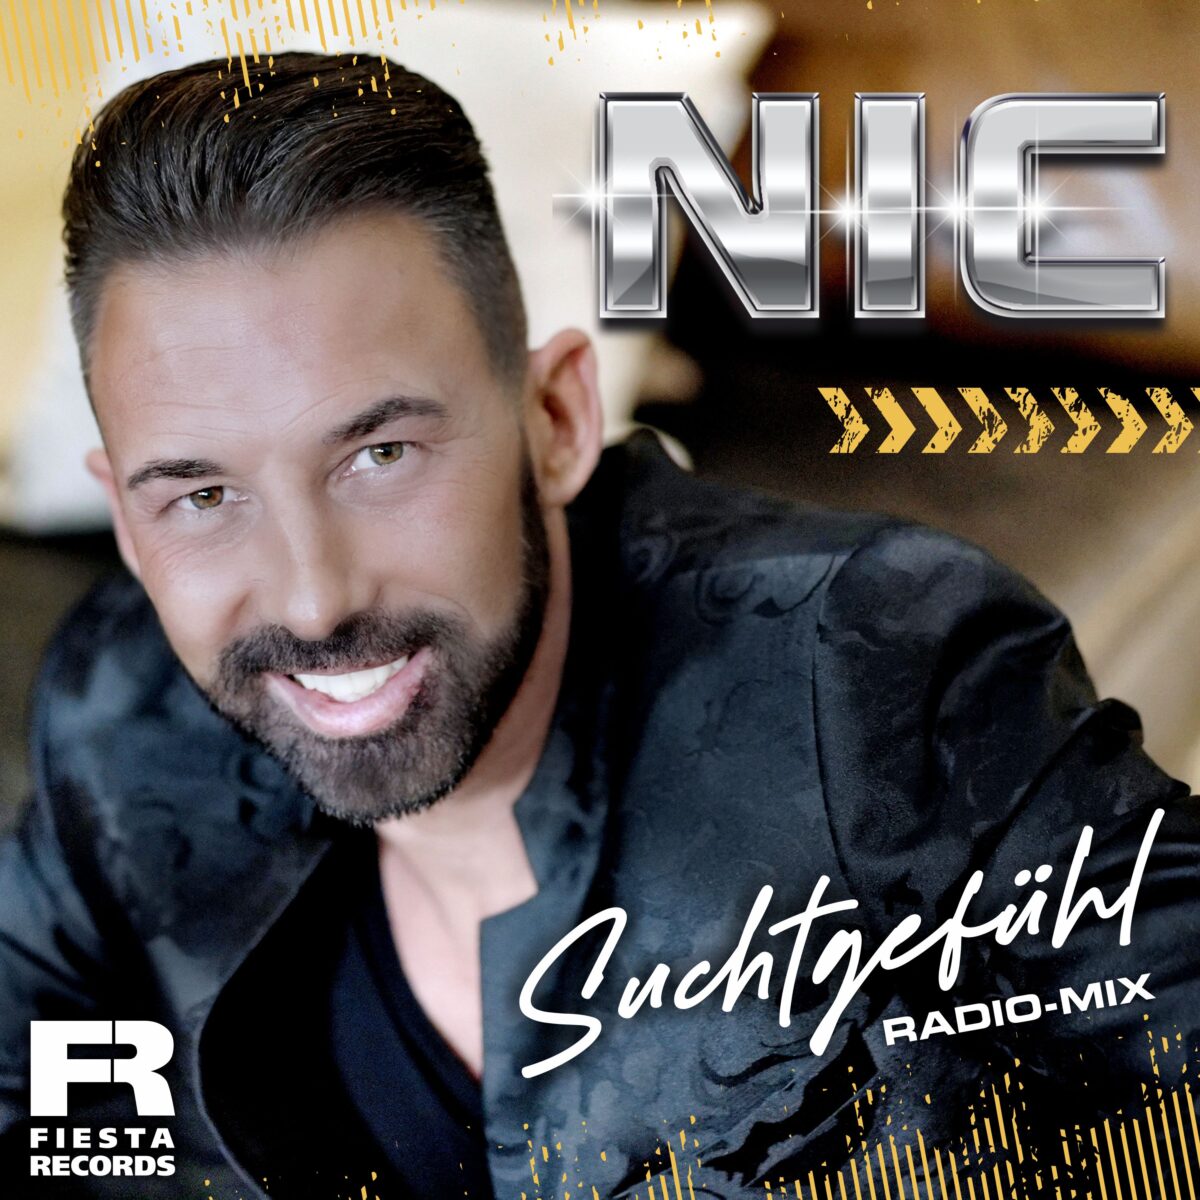 Nic-Suchtgefühl (Radio-Mix)  